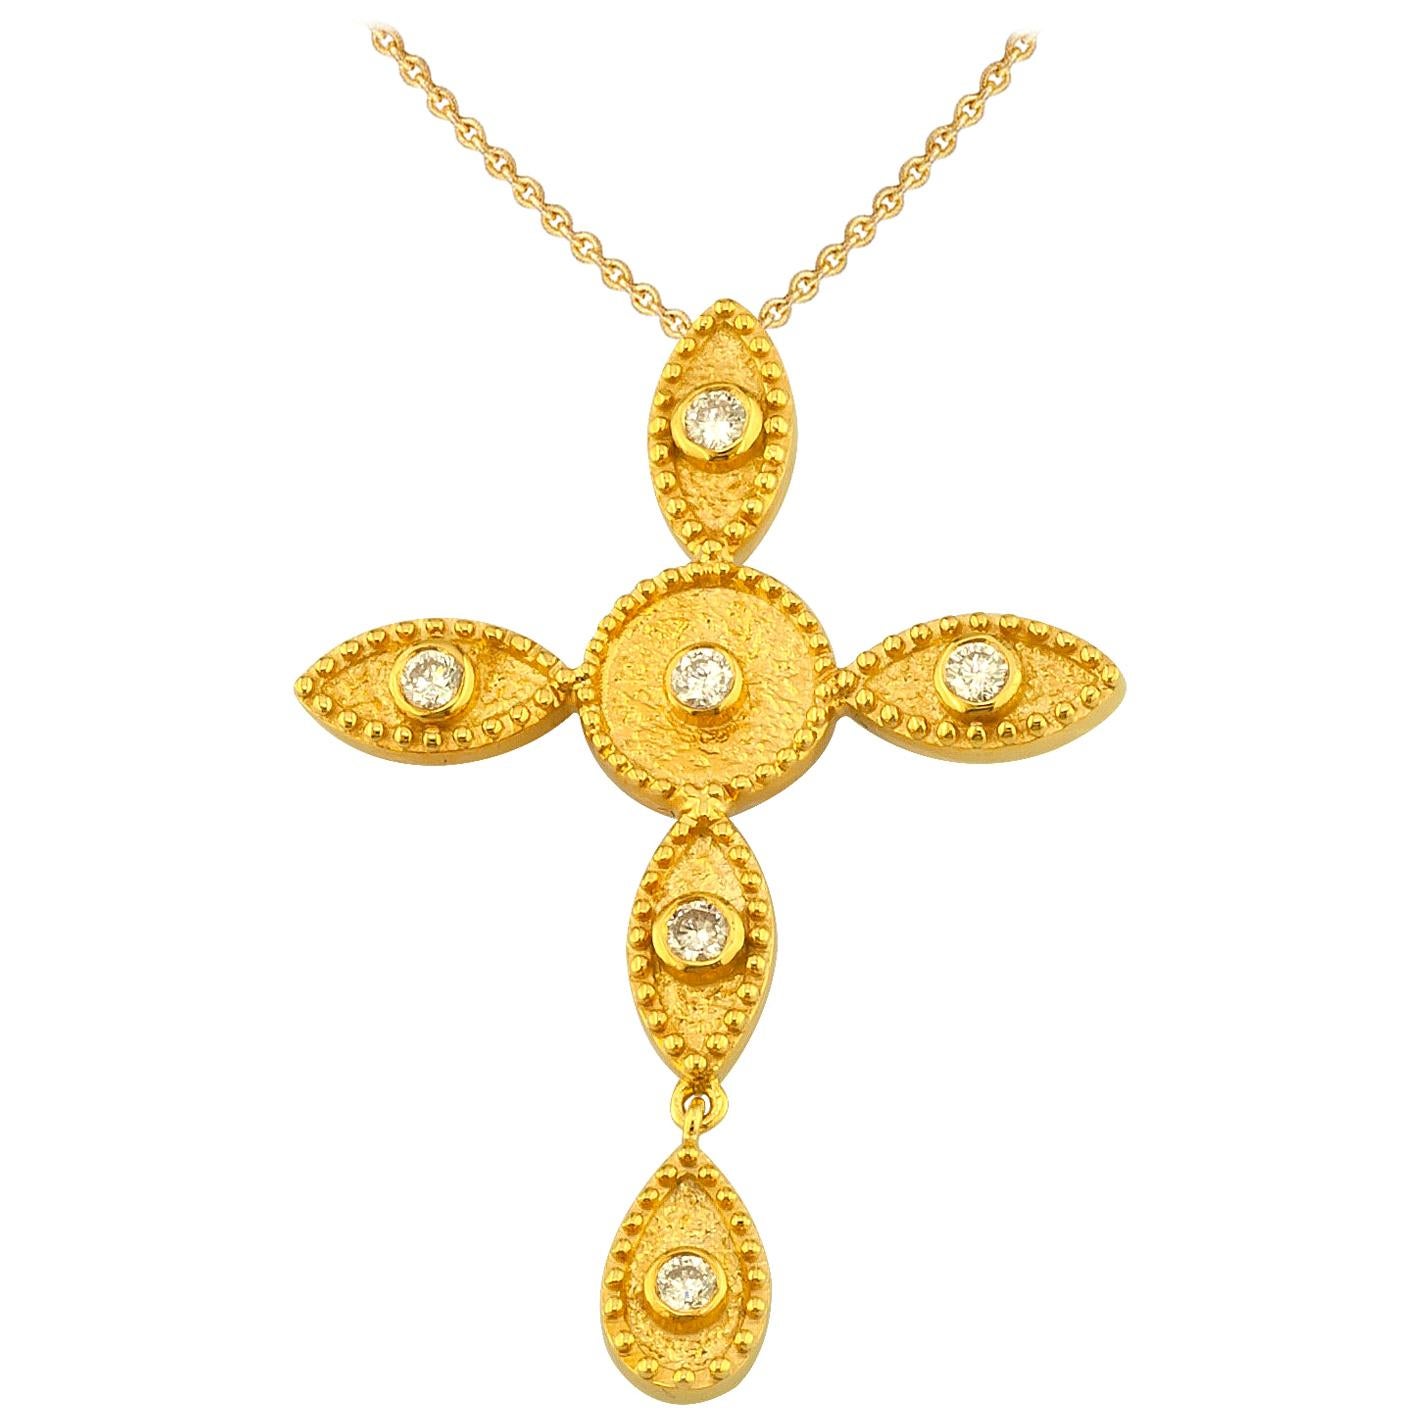 Georgios Collections 18 Karat Yellow Gold Diamond Long Cross Pendant with Chain